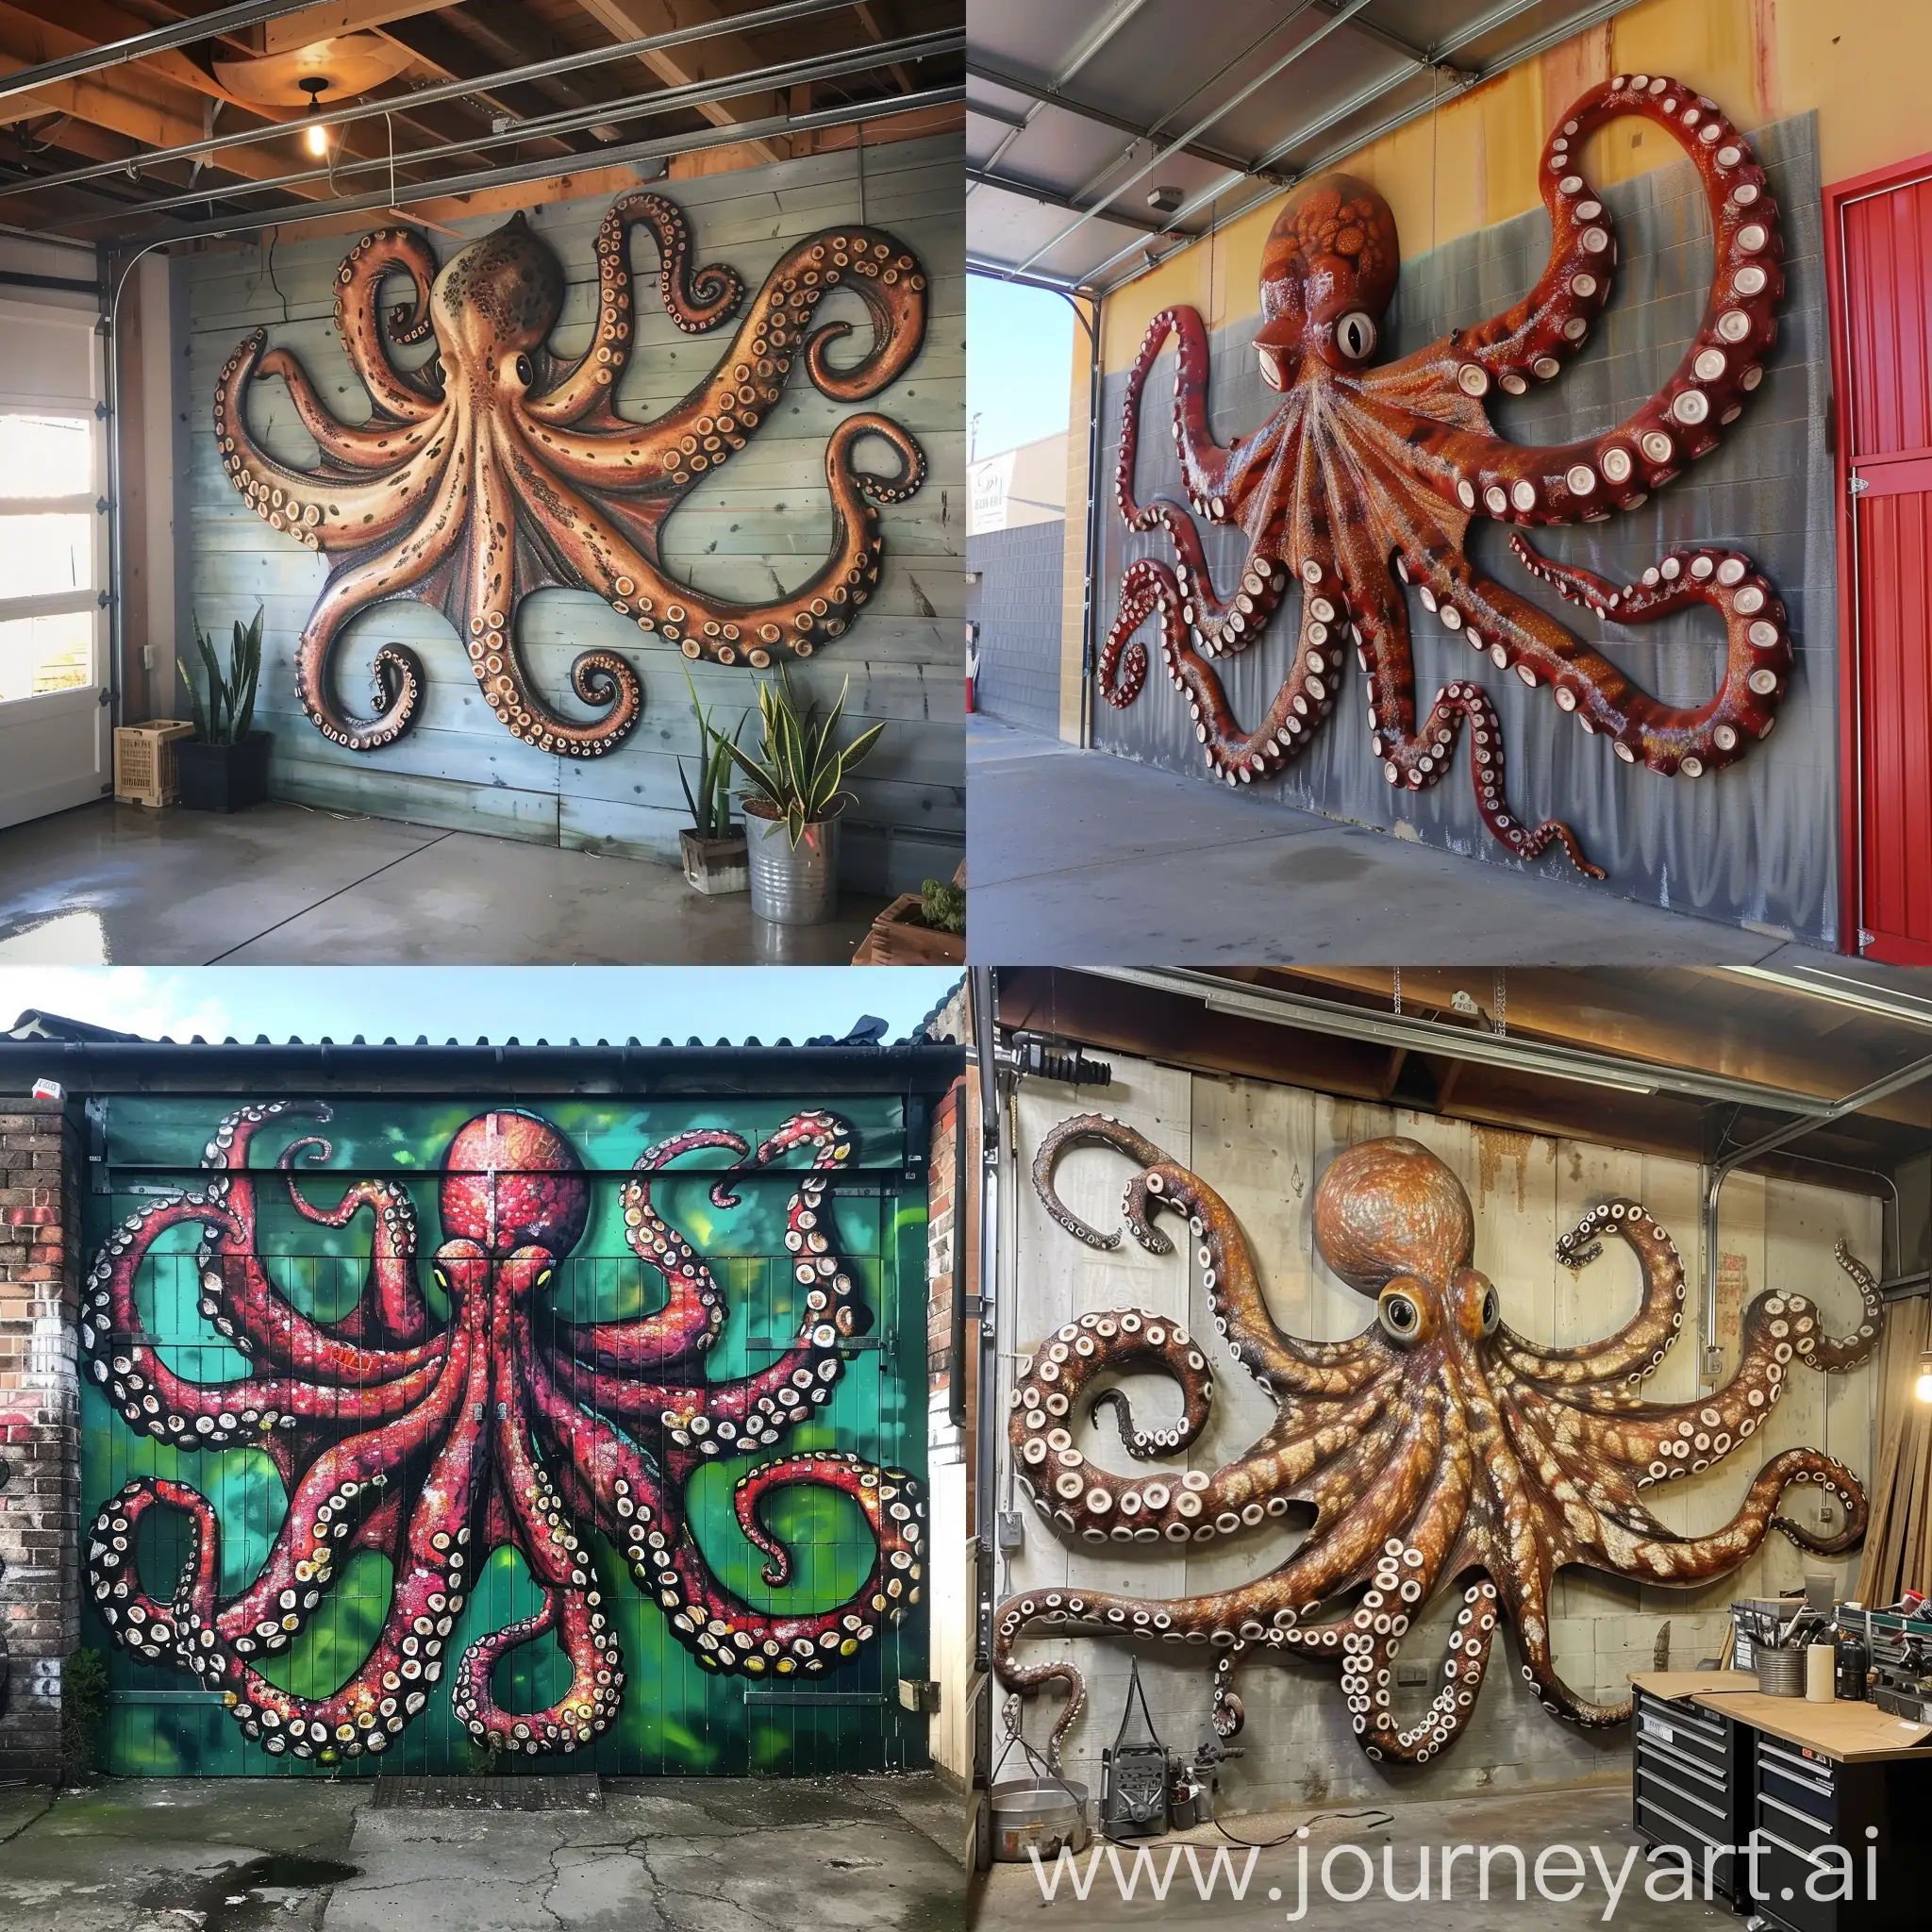 Giant-Octopus-Mural-Adorning-Garage-Wall